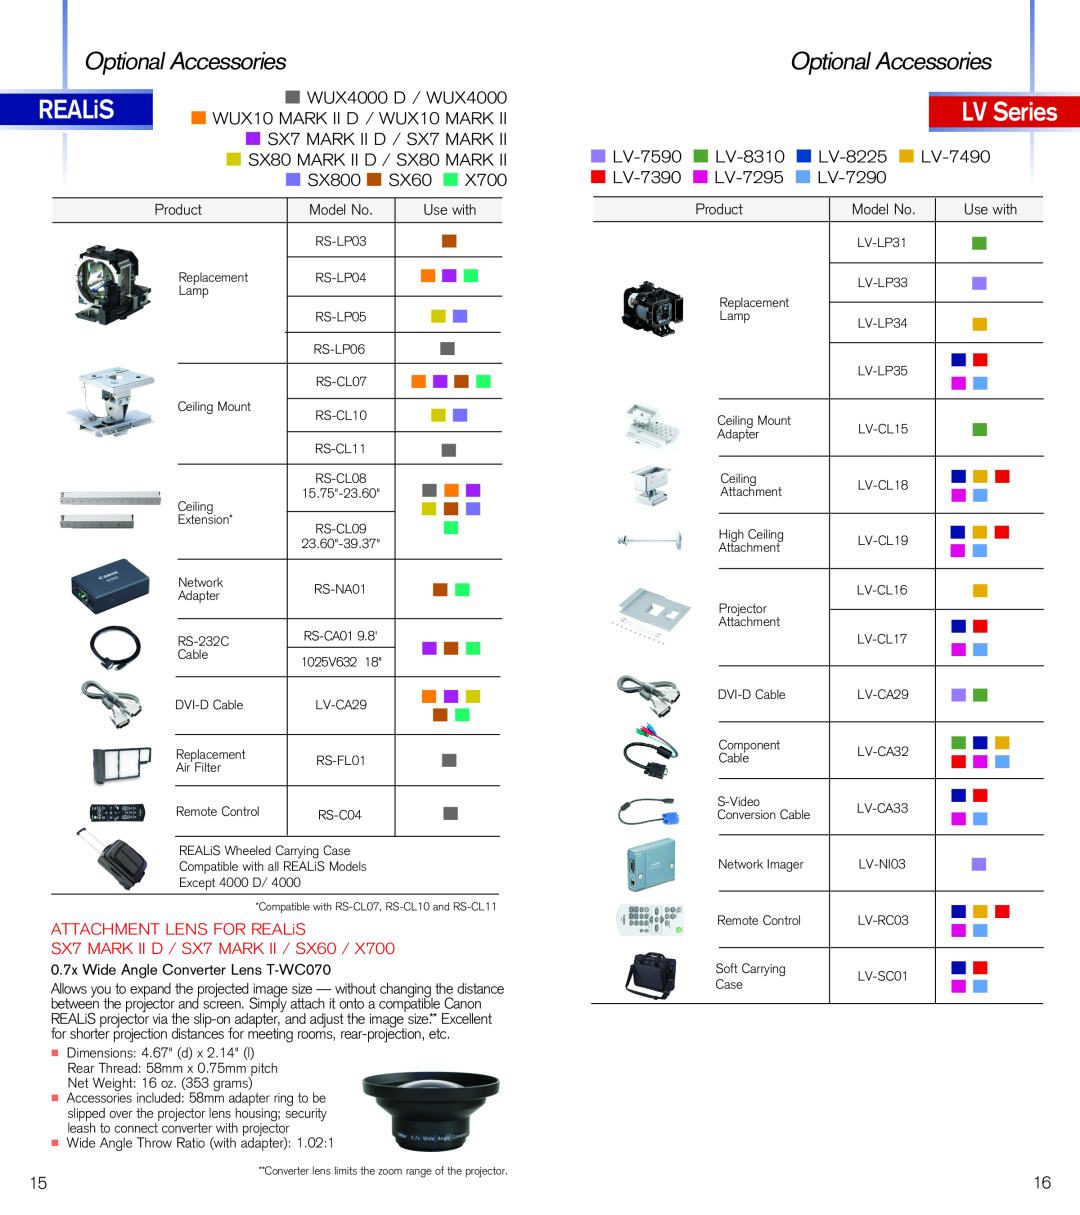 Canon 8225, 8310, 7590 REALiS, LV Series, Optional Accessories, n SX800 n SX60 n, Product, Use with, Model No, n n n n 